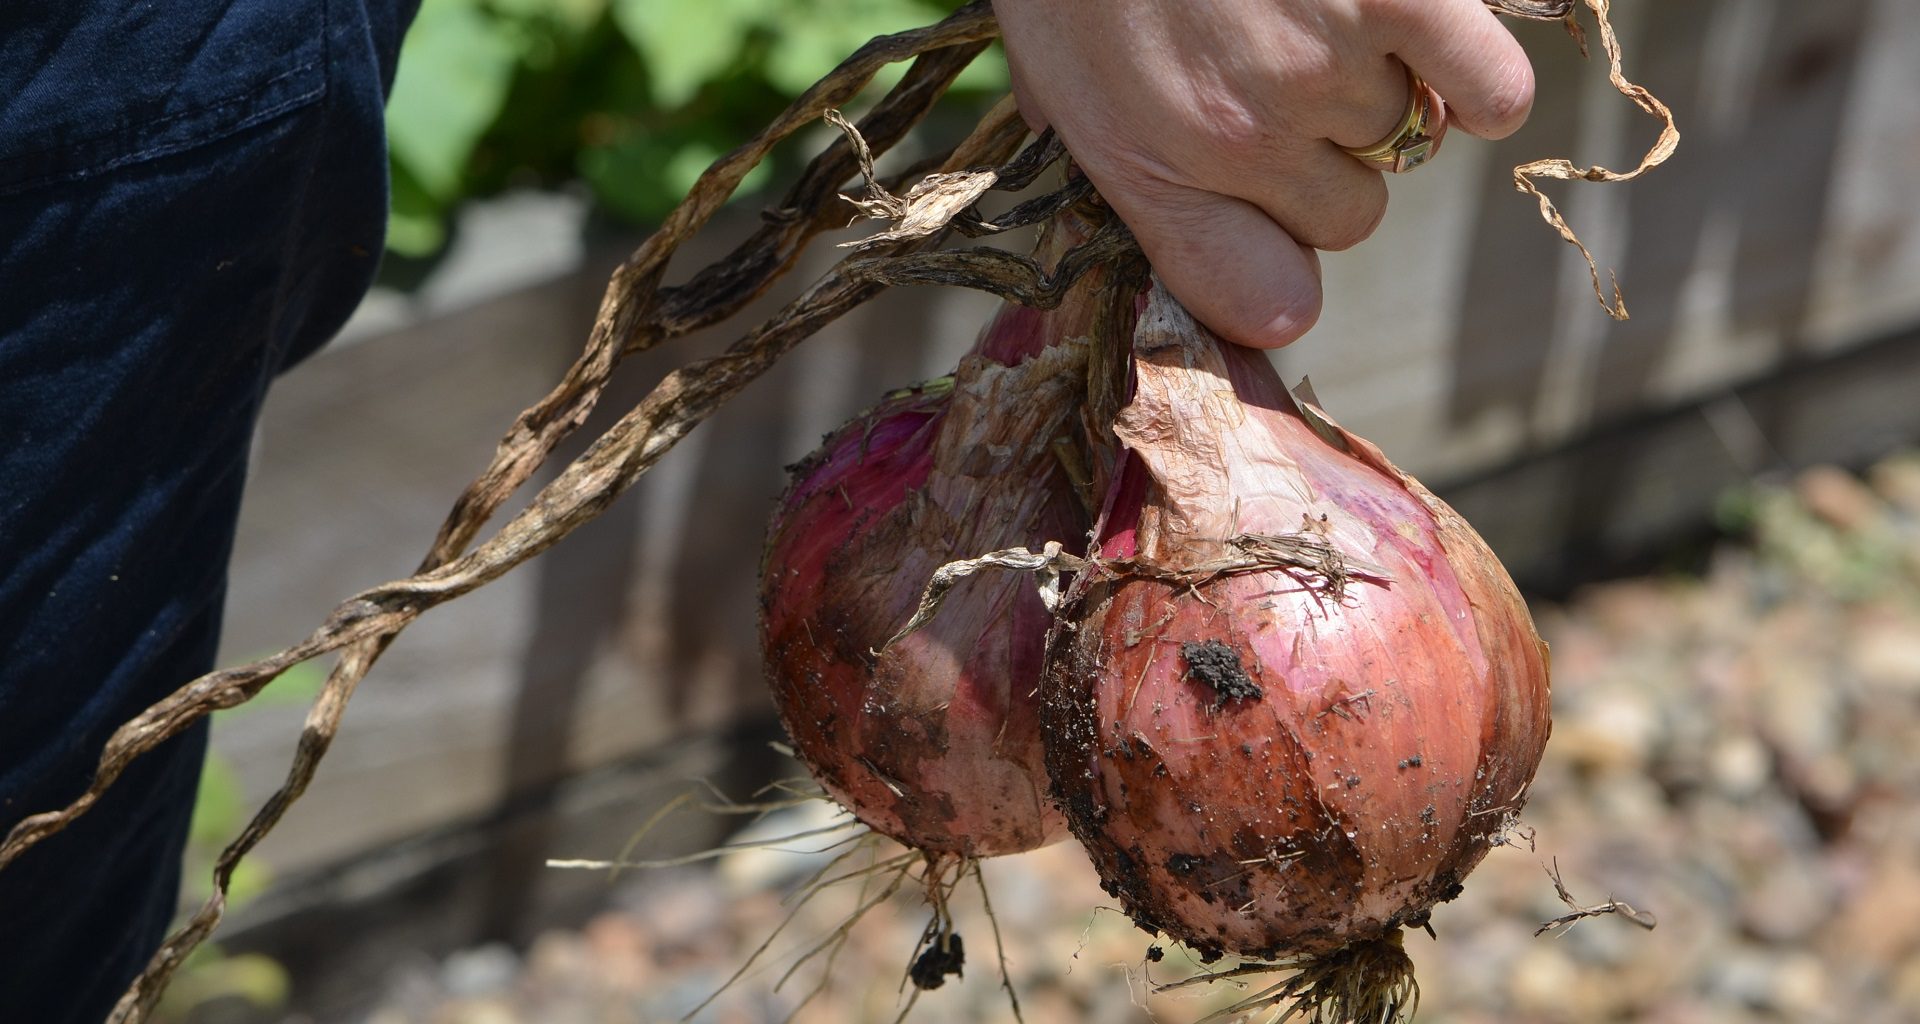 Harvesting Onions The Proper Way